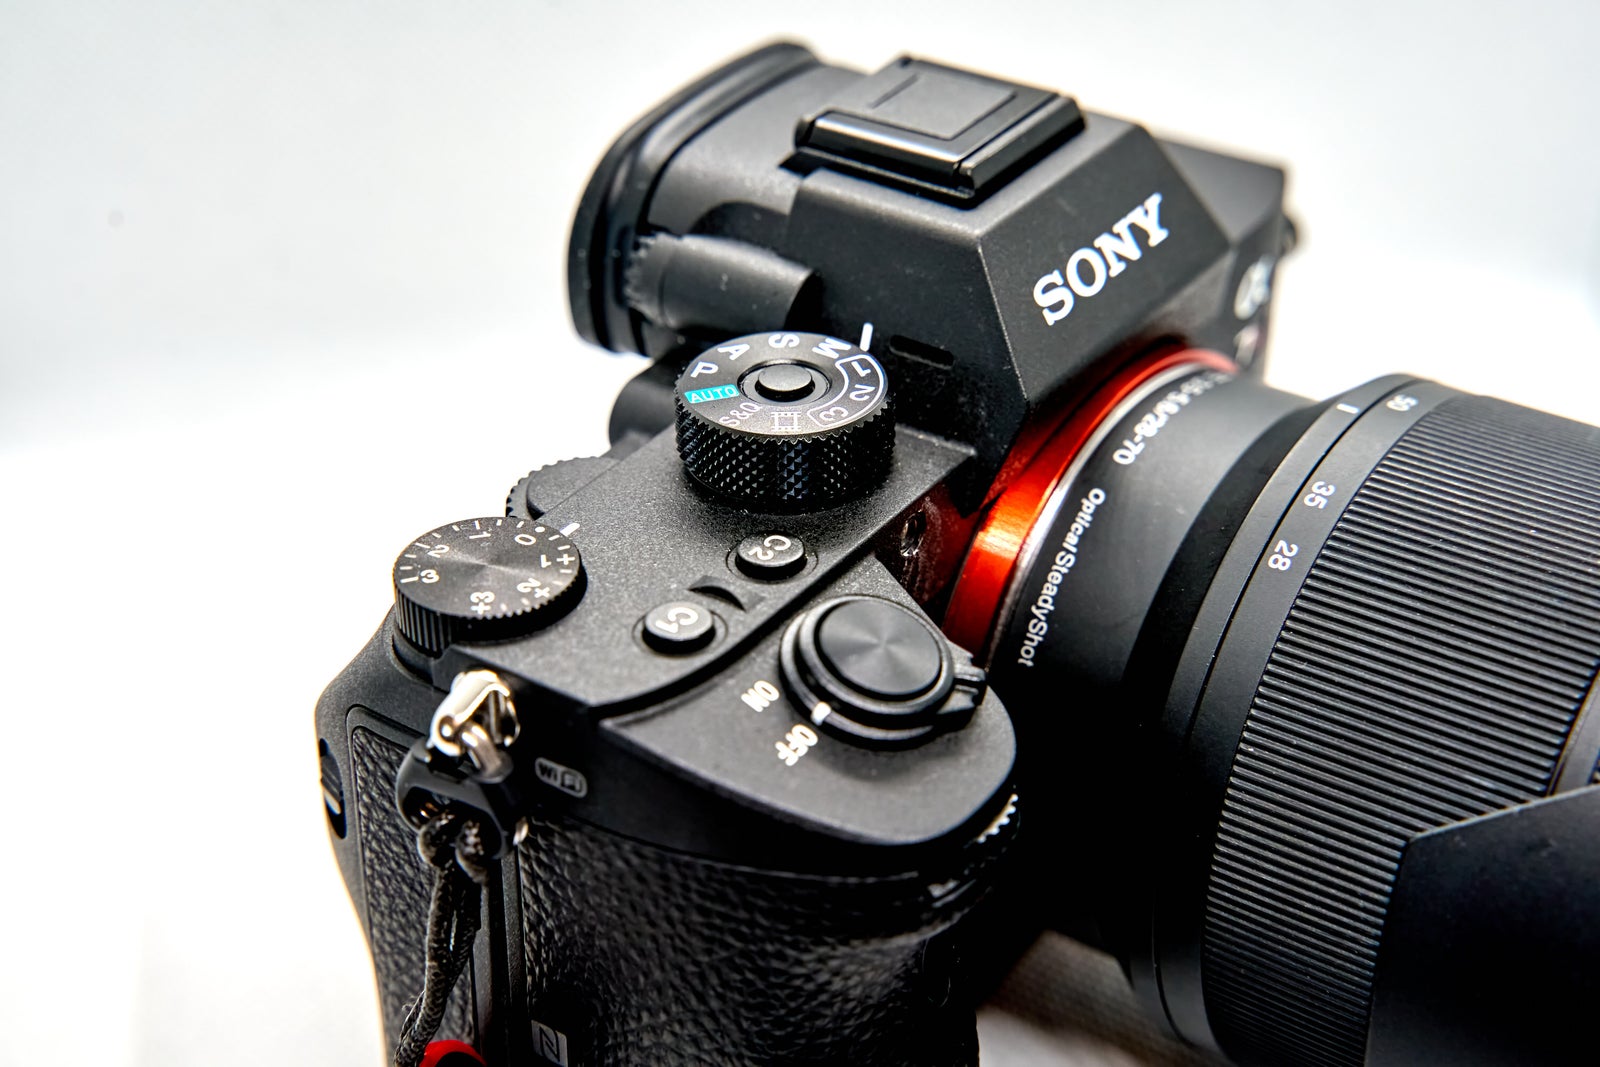 Sony, A7R IIIA - ILCE-A7RM3A, 42.4 megapixels